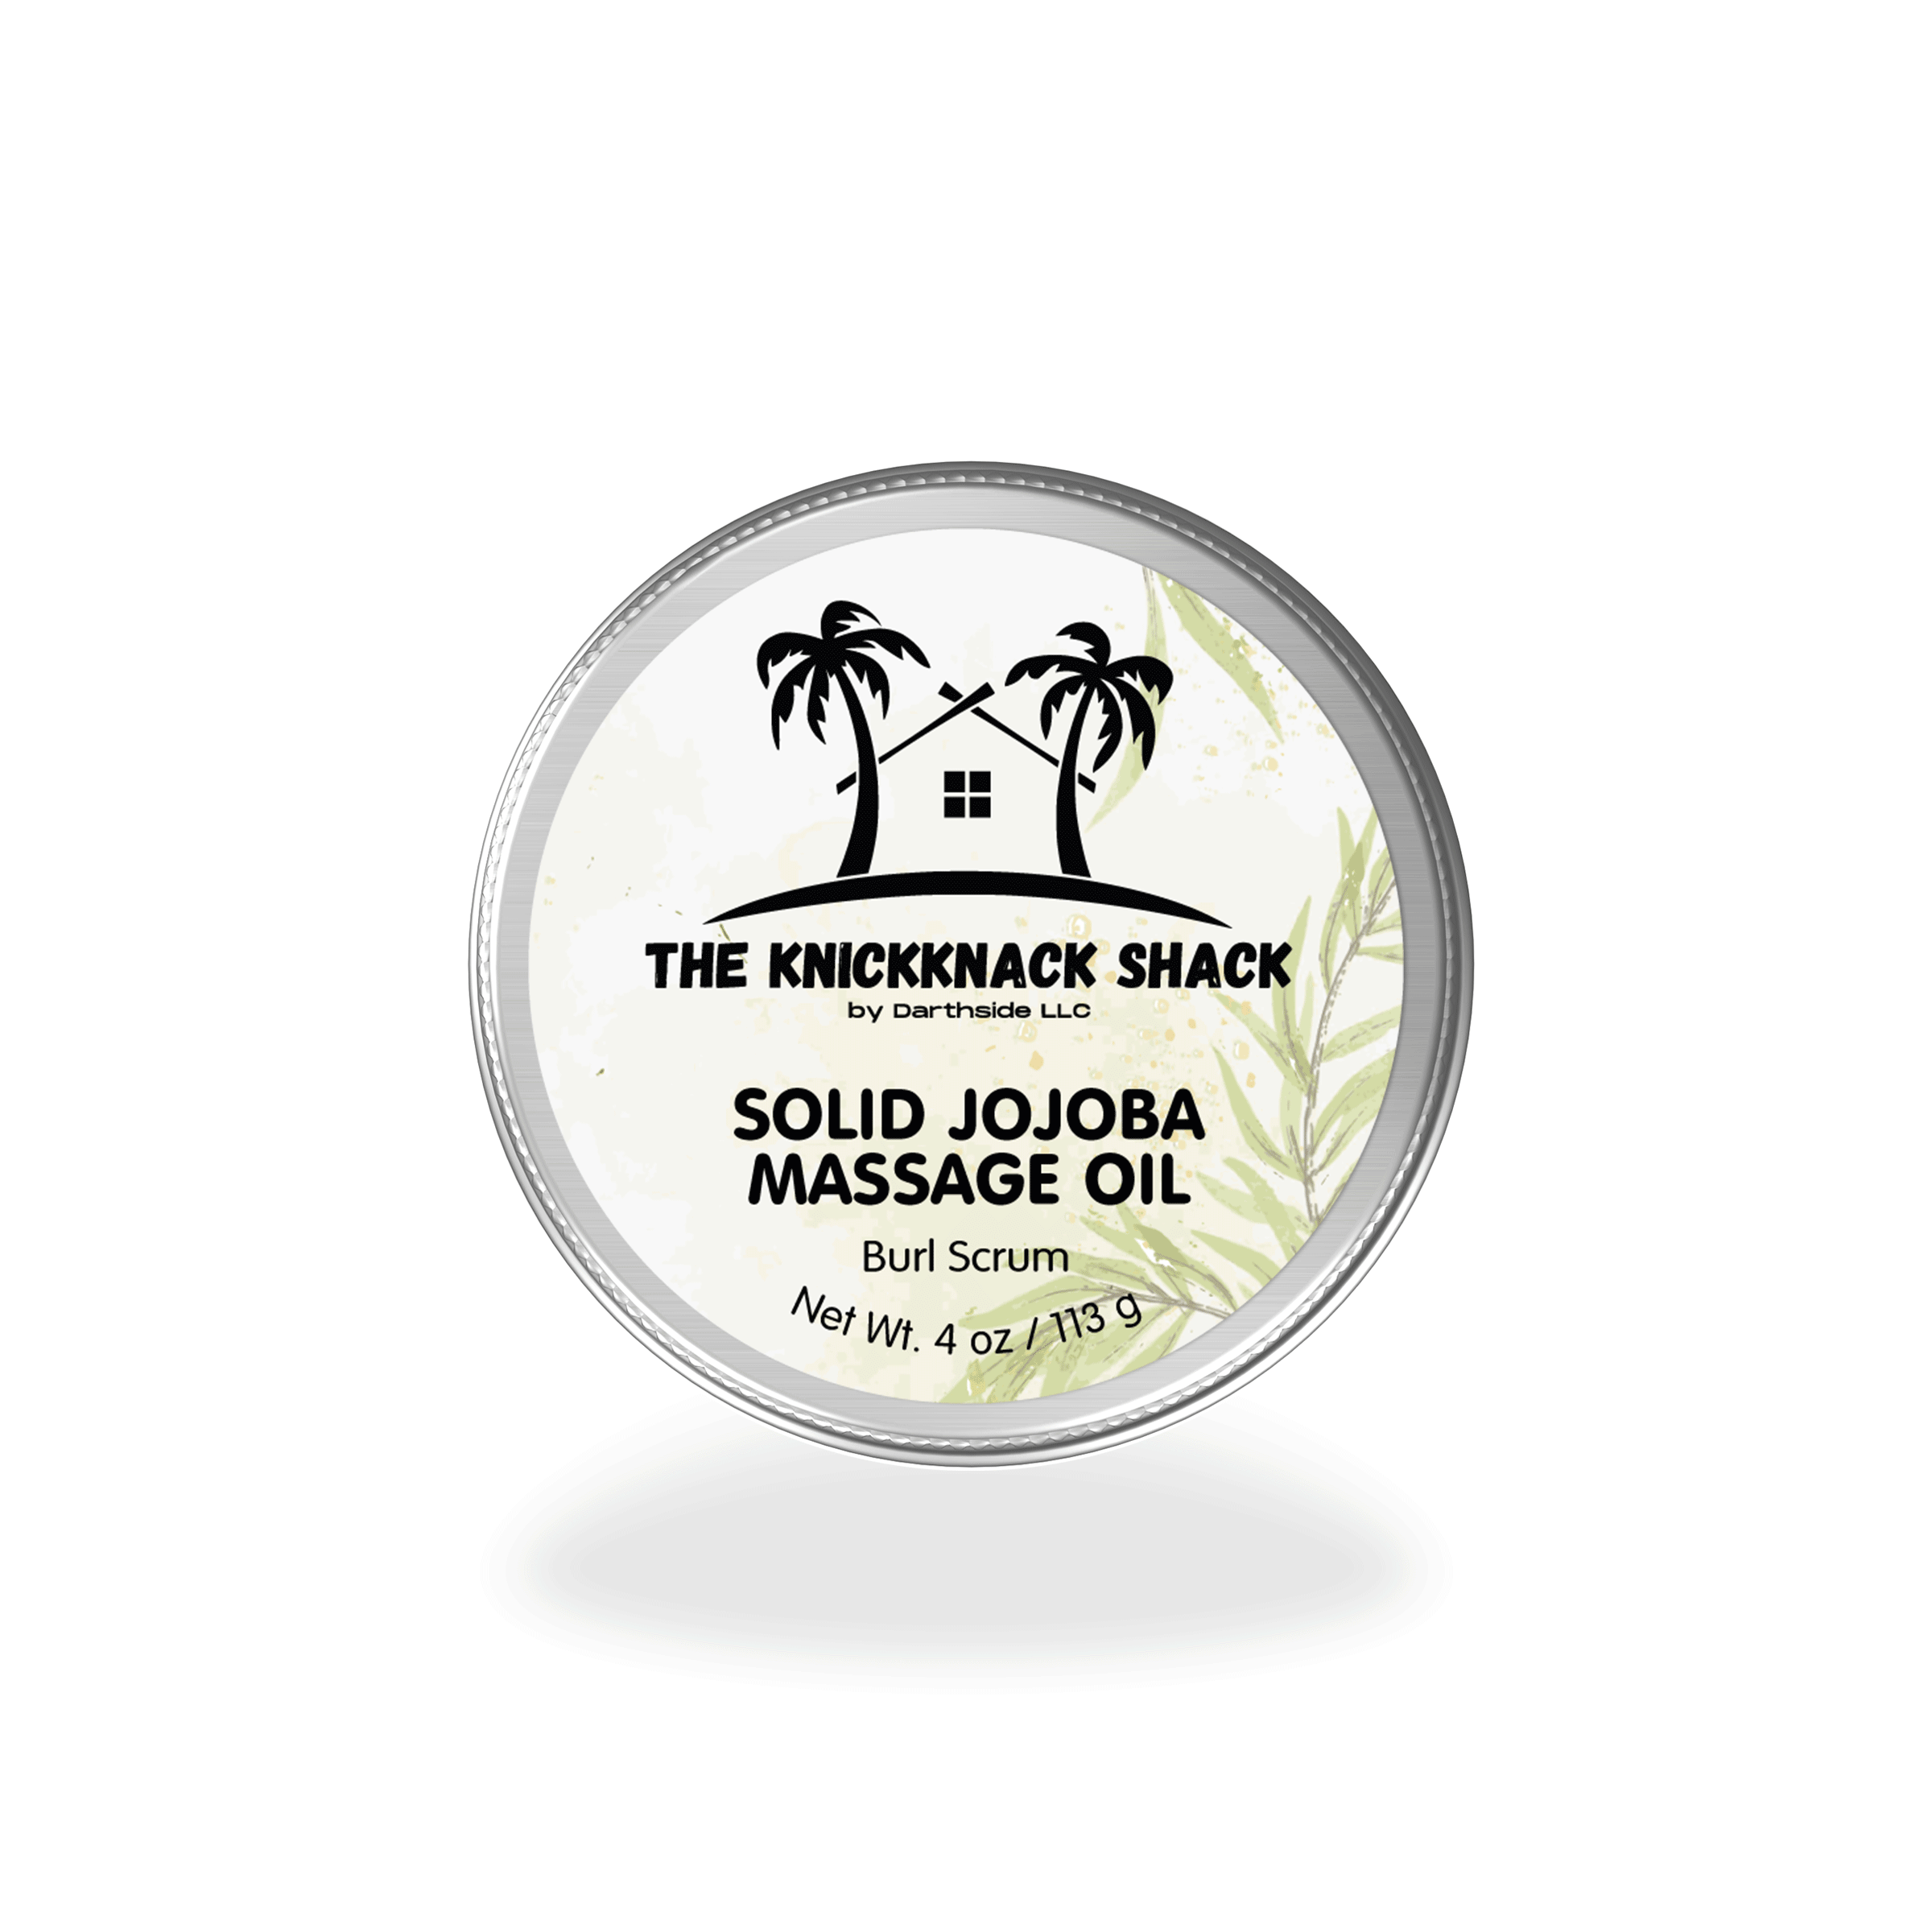 Burl Scrum Solid Jojoba Massage Oil